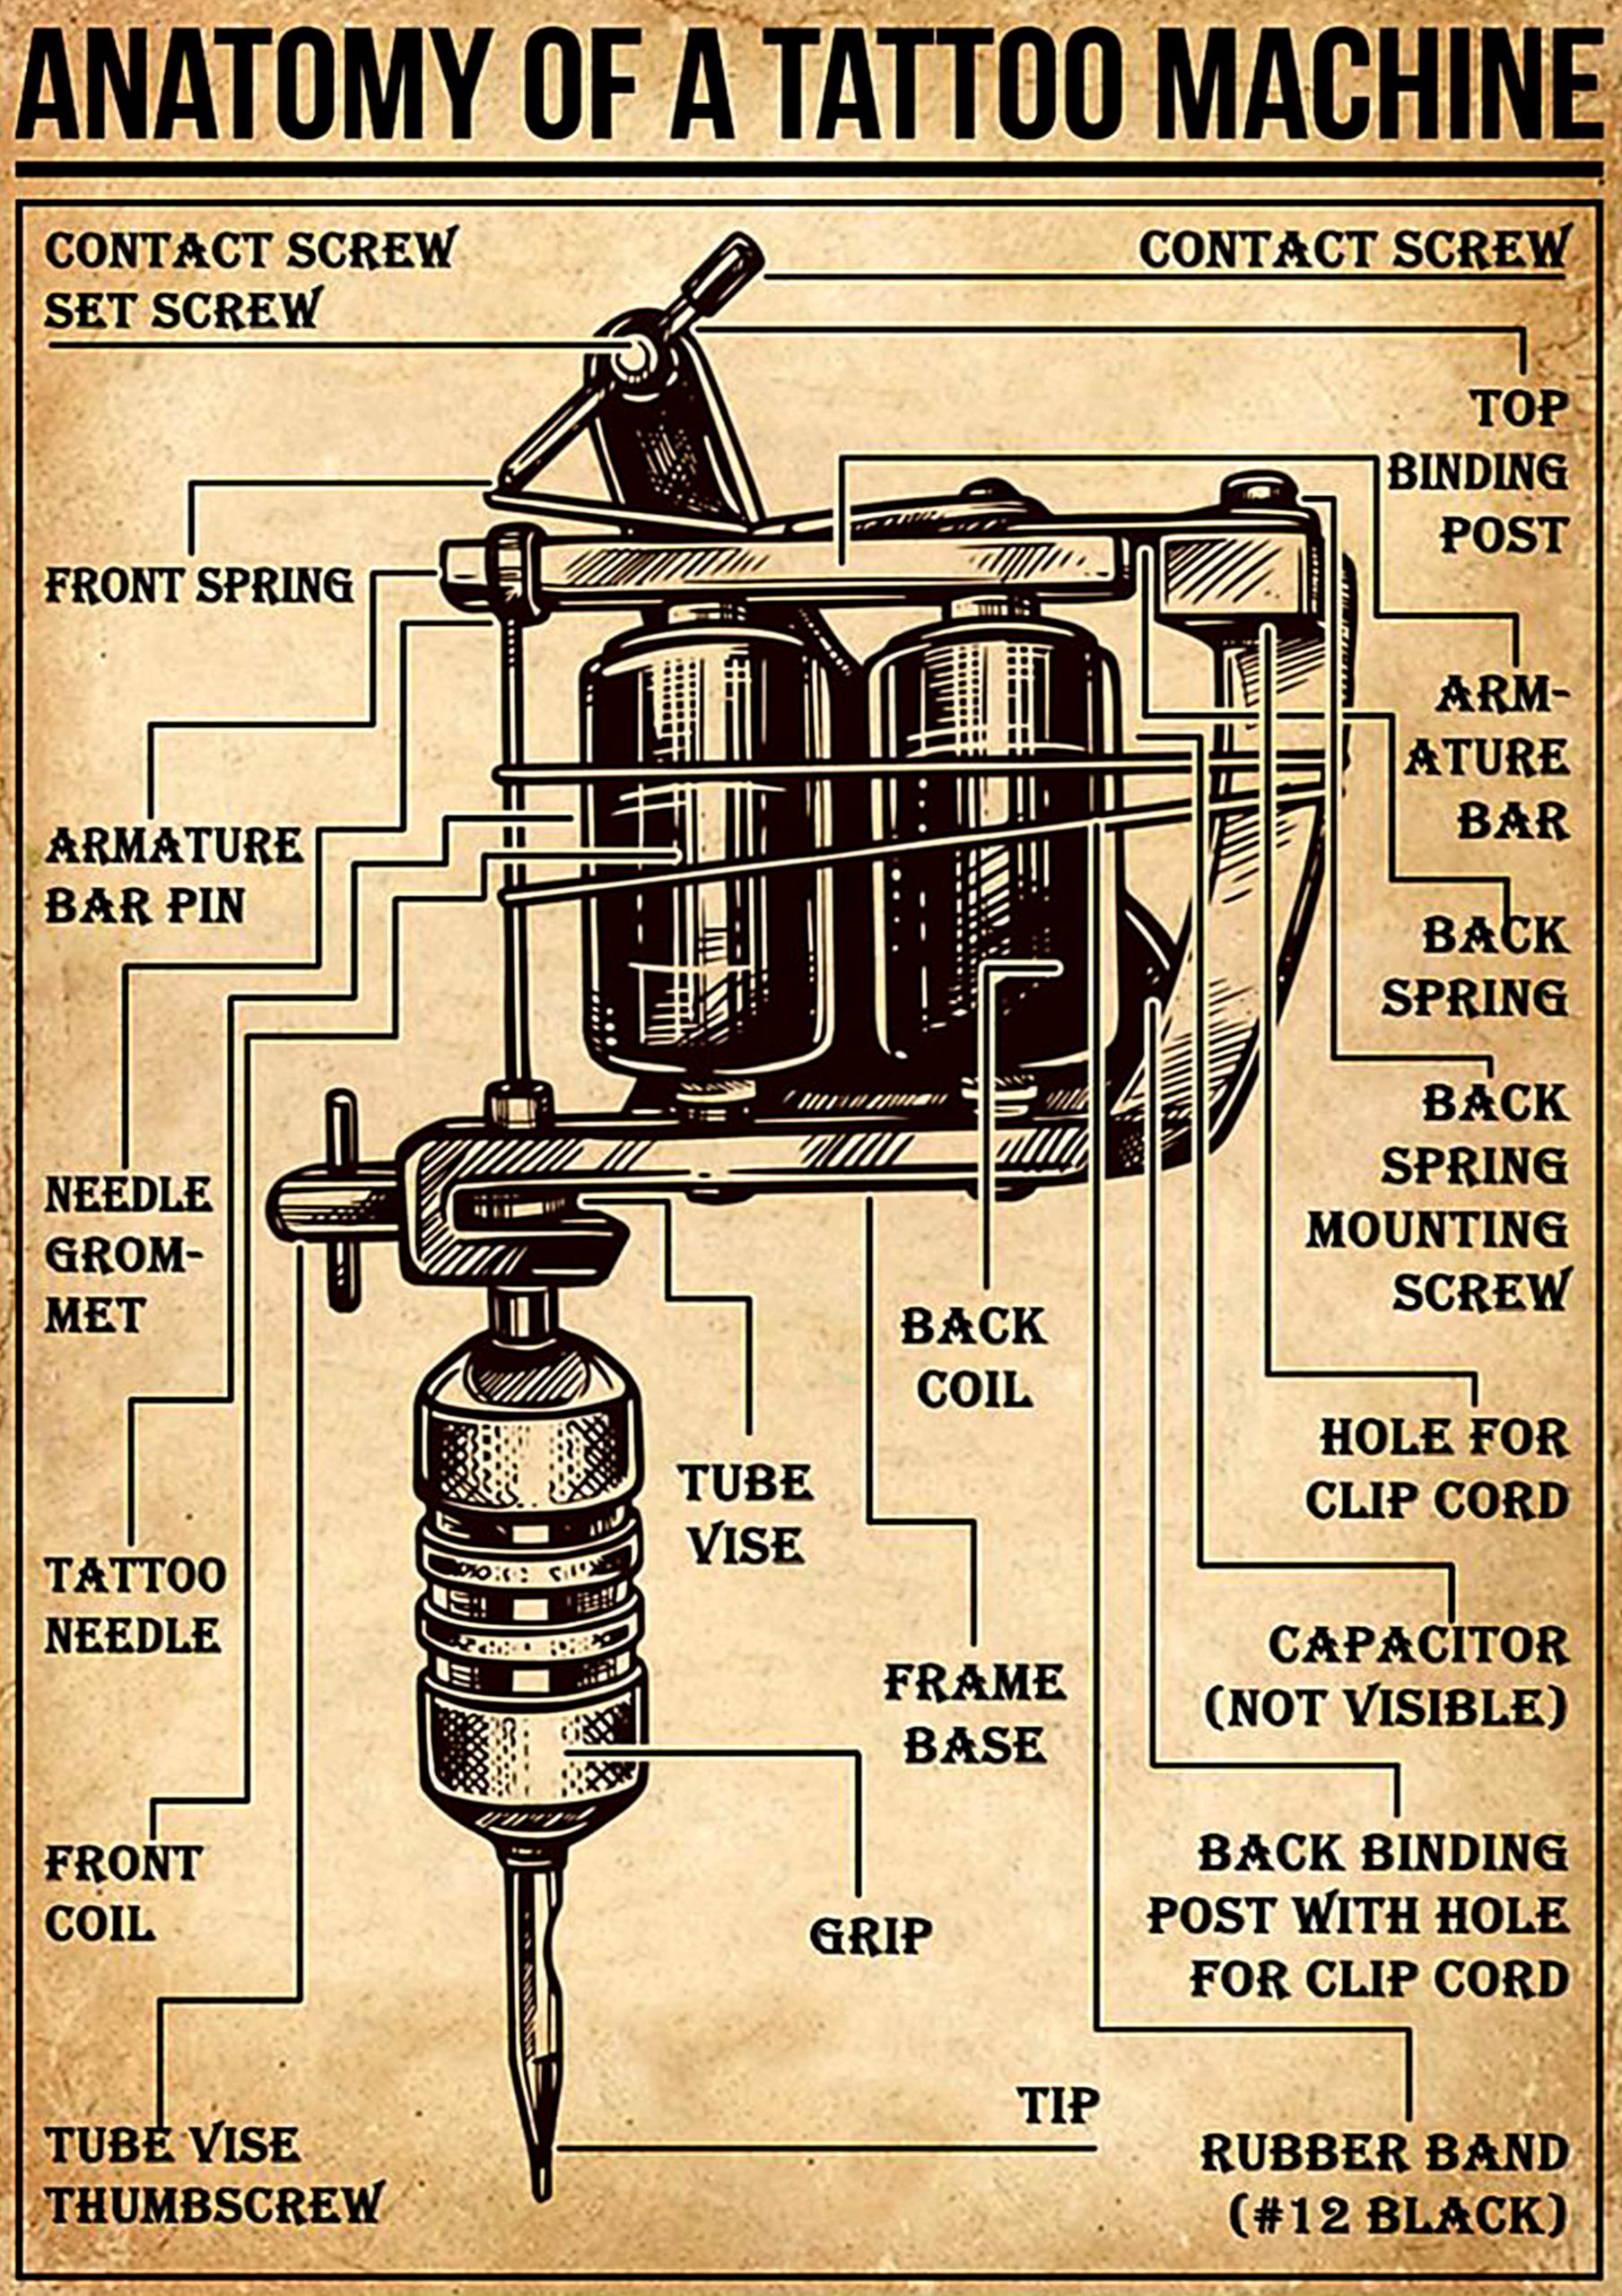 vintage anatomy of a tattoo machine poster 1 - Copy (2)